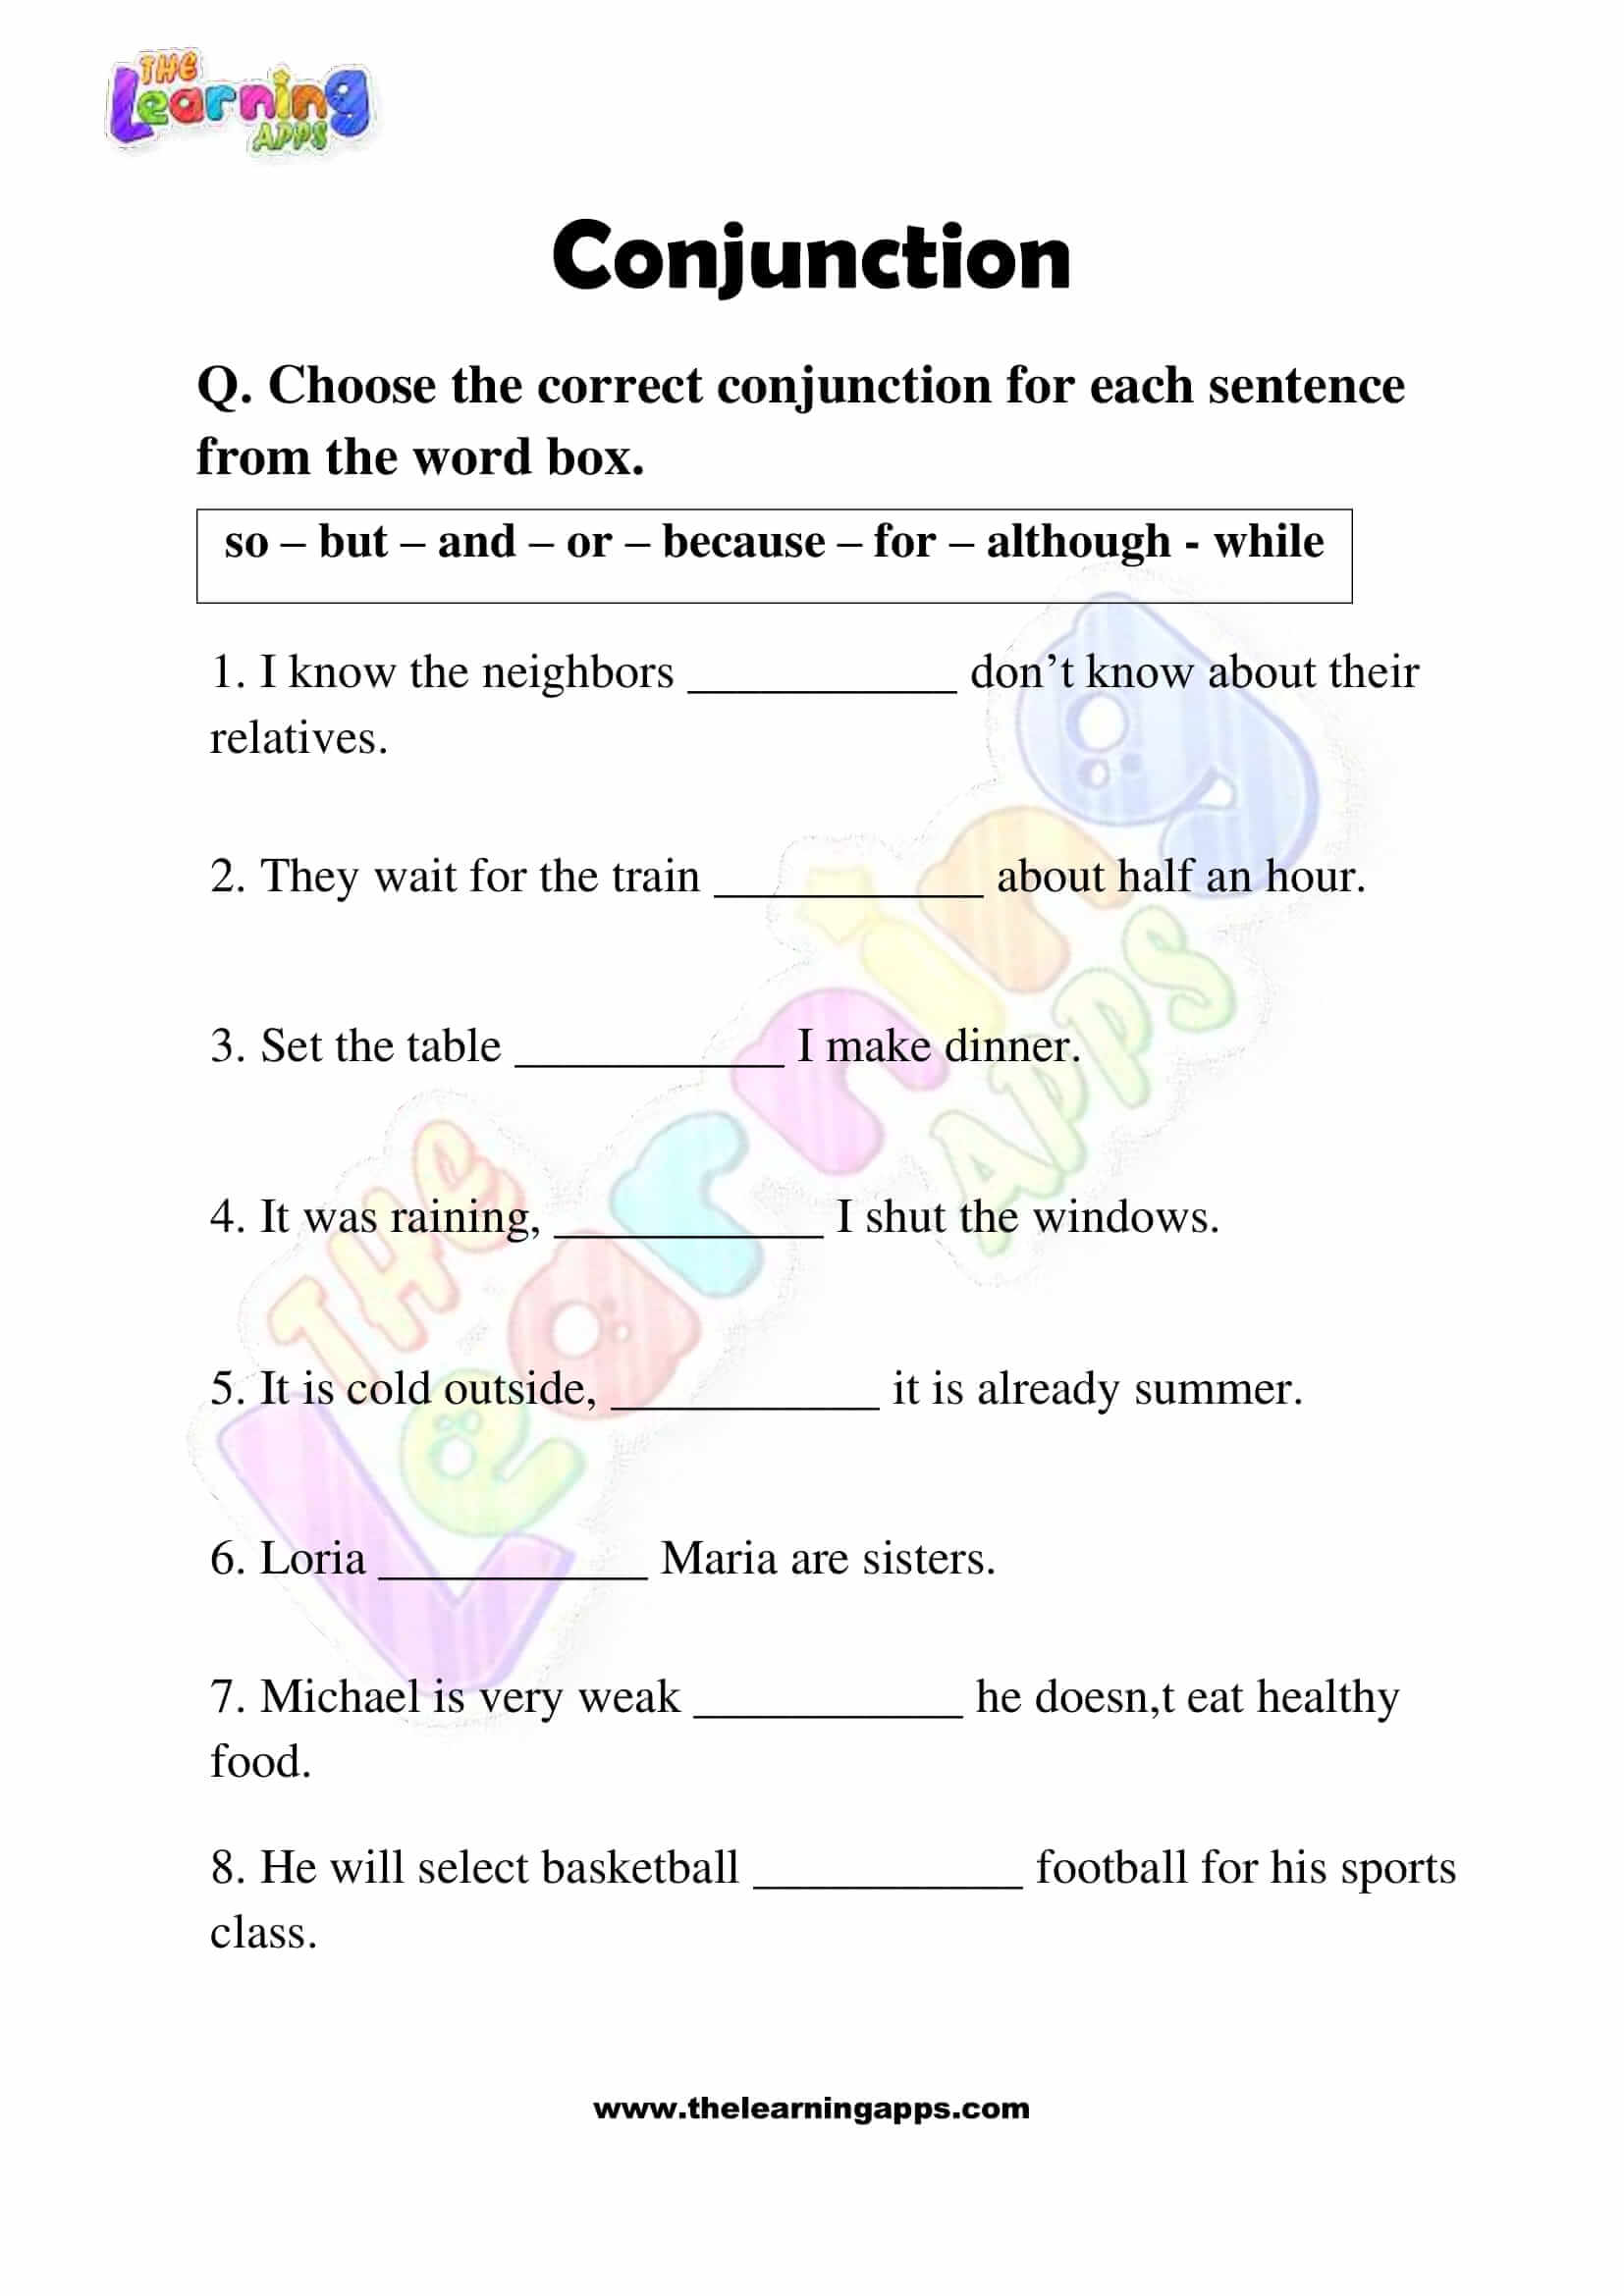 Conjunction Worksheets - Grade 3 - Activity 4